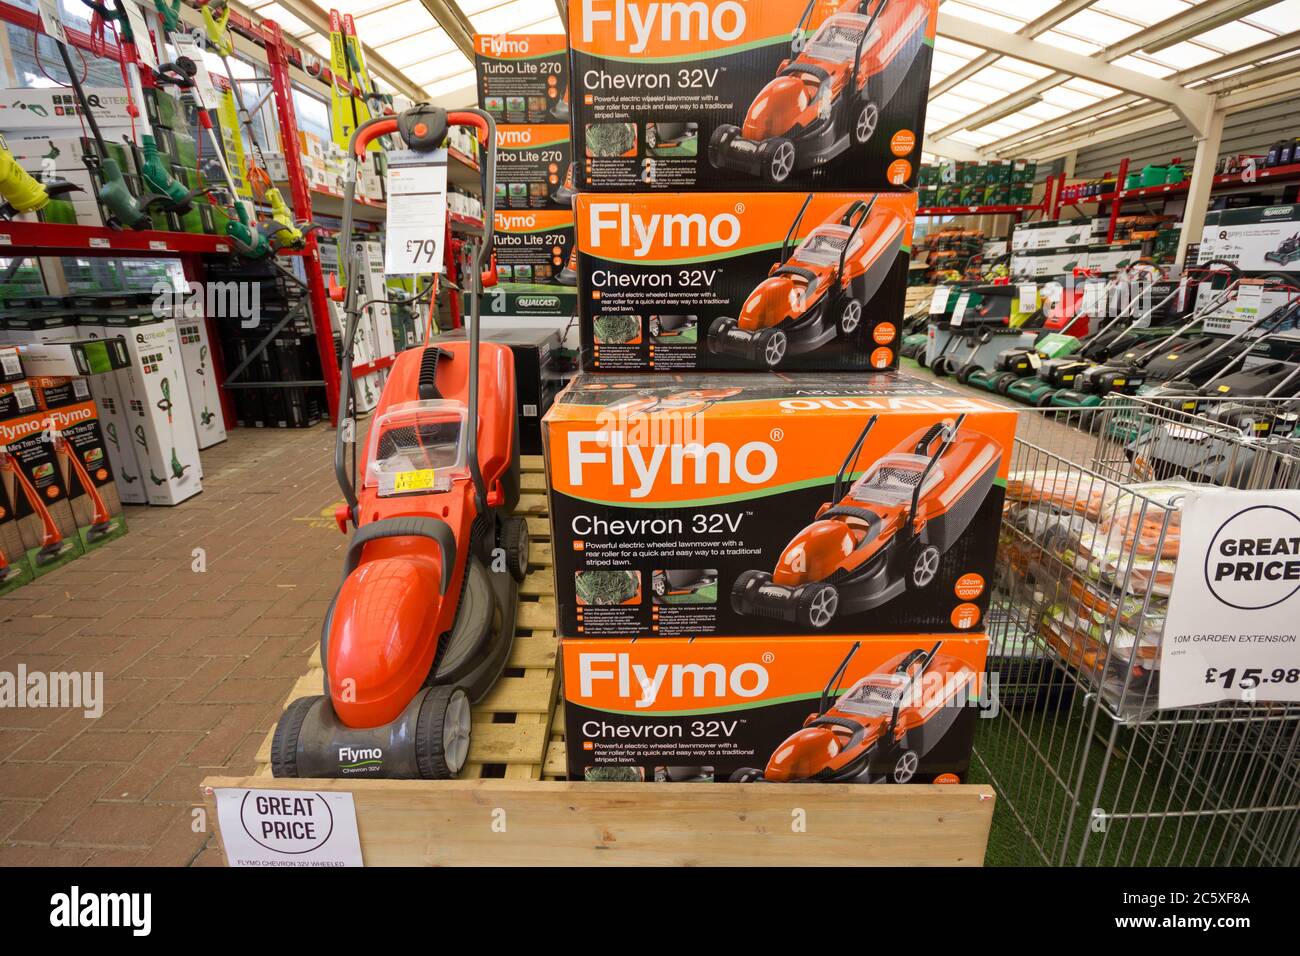 Flymo lawn mower on display in garden centre retailer Homebase Stock Photo